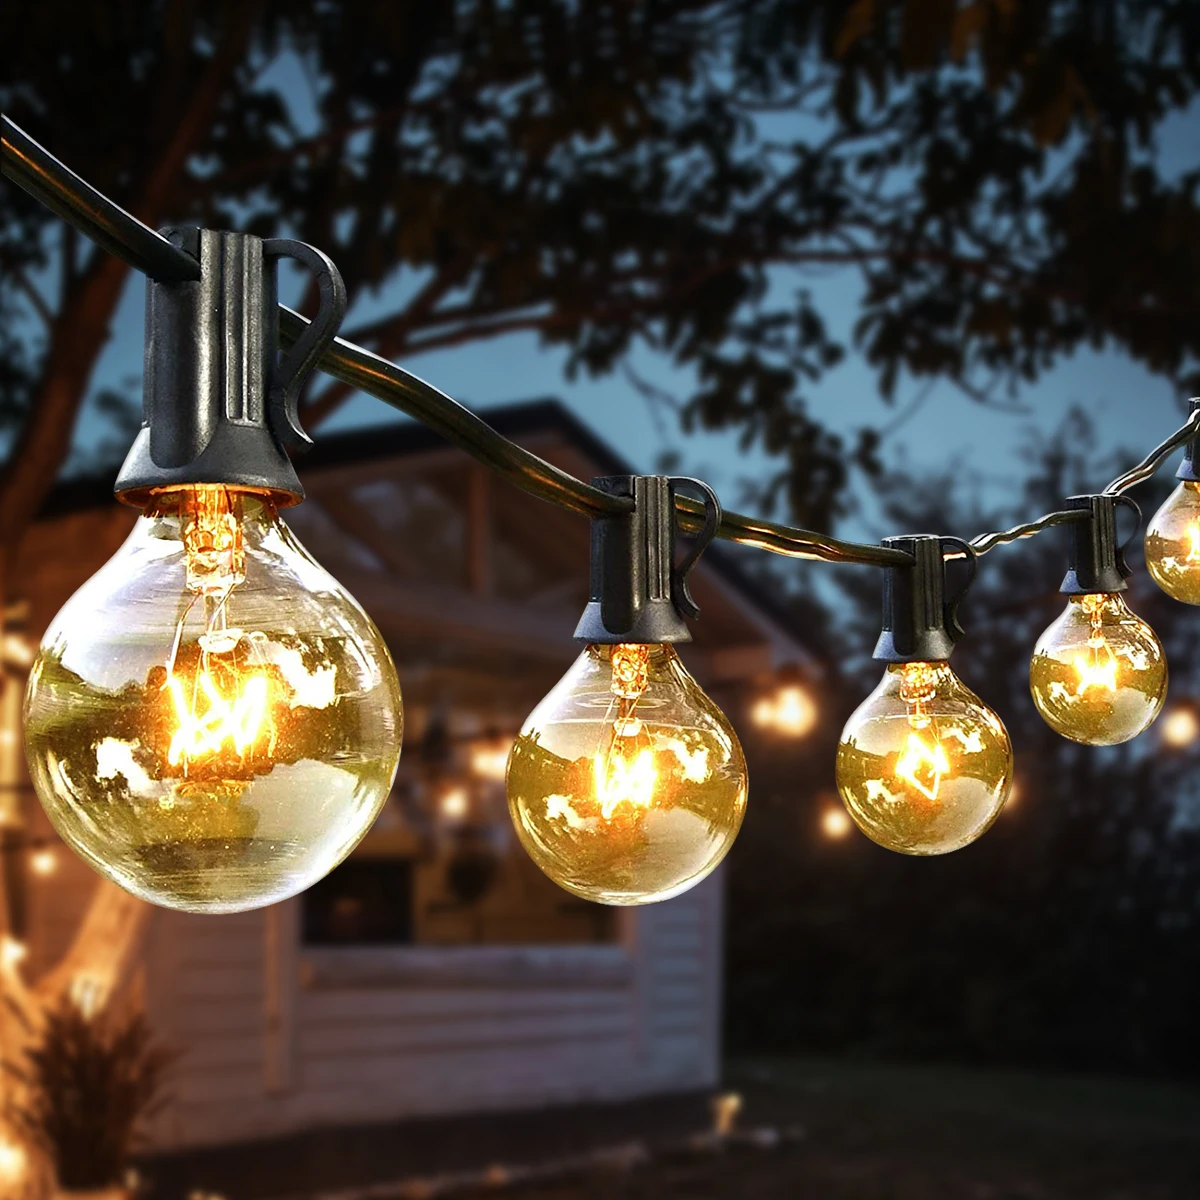 Details about   LED Lights String Fairy Bulb Lamps Christmas Patio Wedding Garden Decor EU Plug 